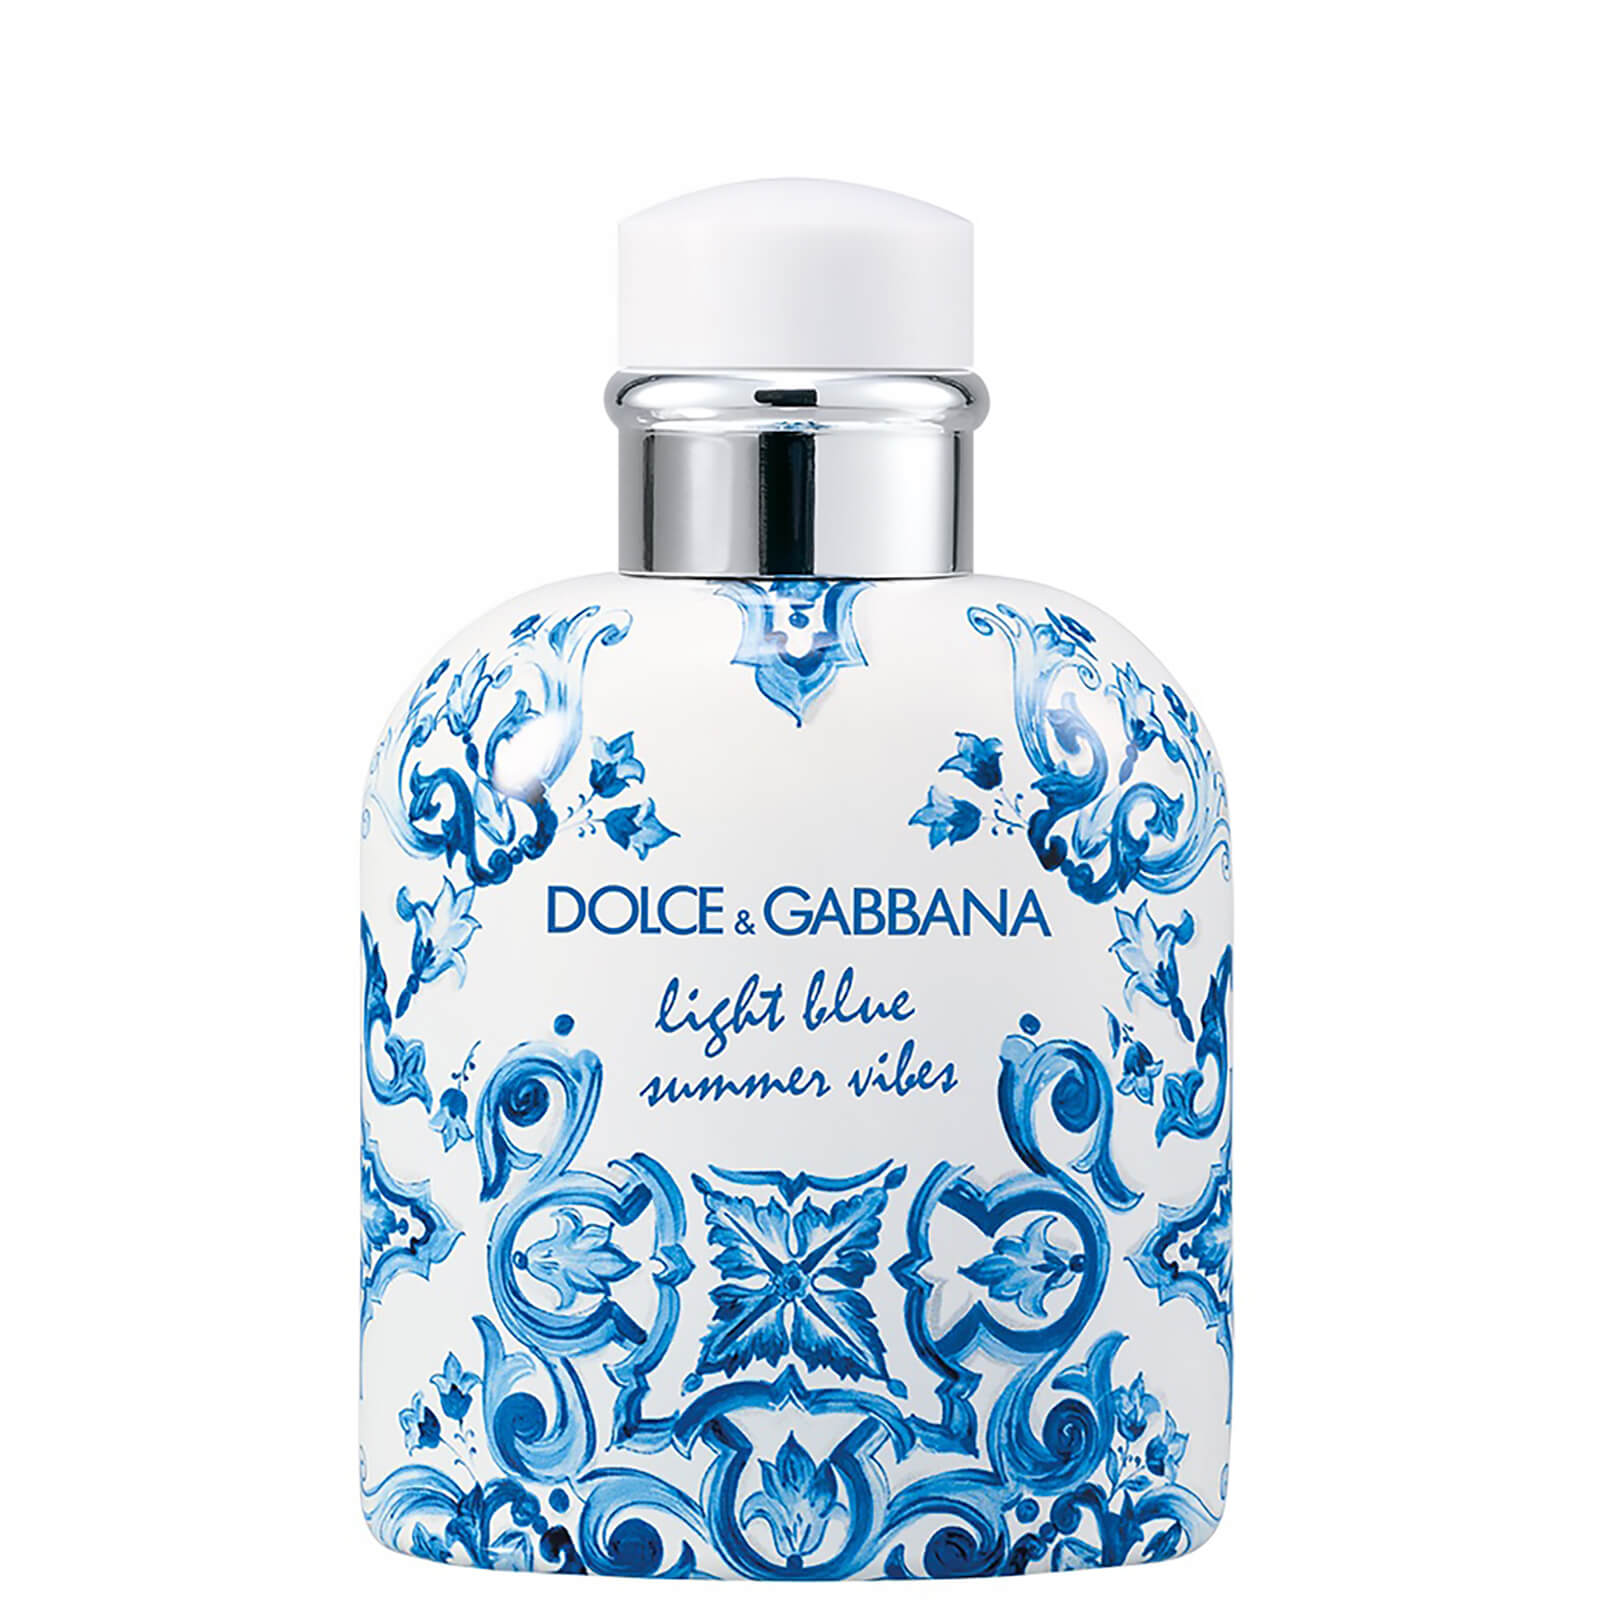 dolce-gabbana-light-blue-homme-summer-vibes-limited-edition-eau-de-toilette-spray-125-ml